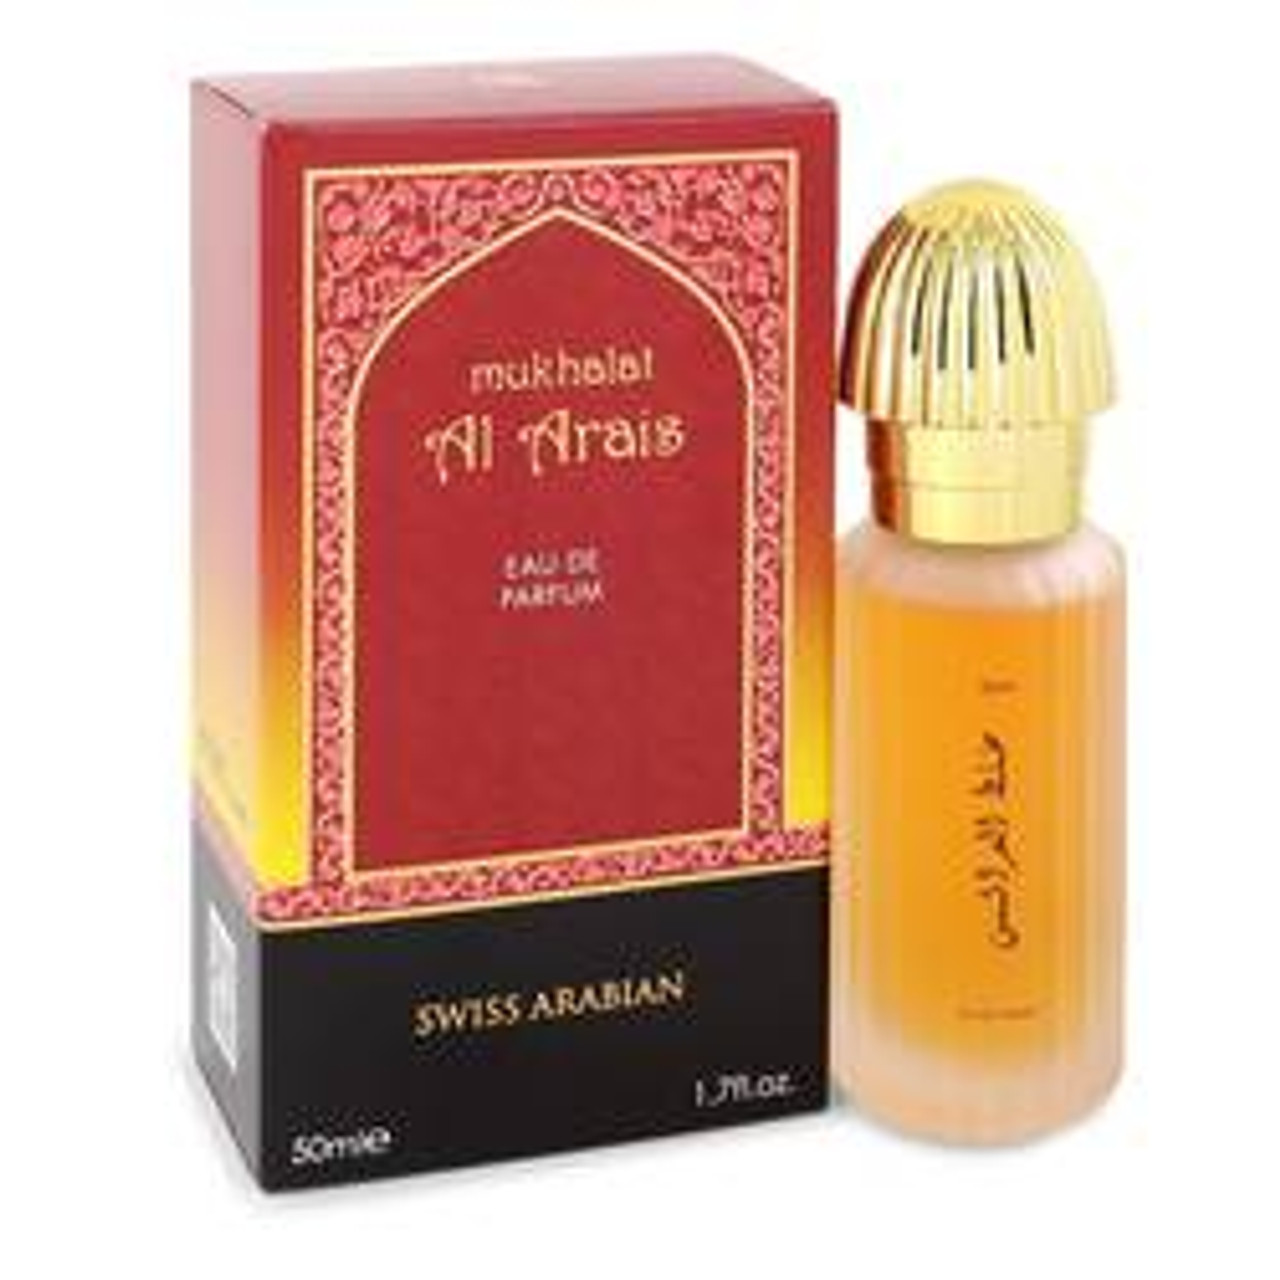 Mukhalat Al Arais Cologne By Swiss Arabian Eau De Parfum Spray 1.7 oz for Men - [From 75.00 - Choose pk Qty ] - *Ships from Miami